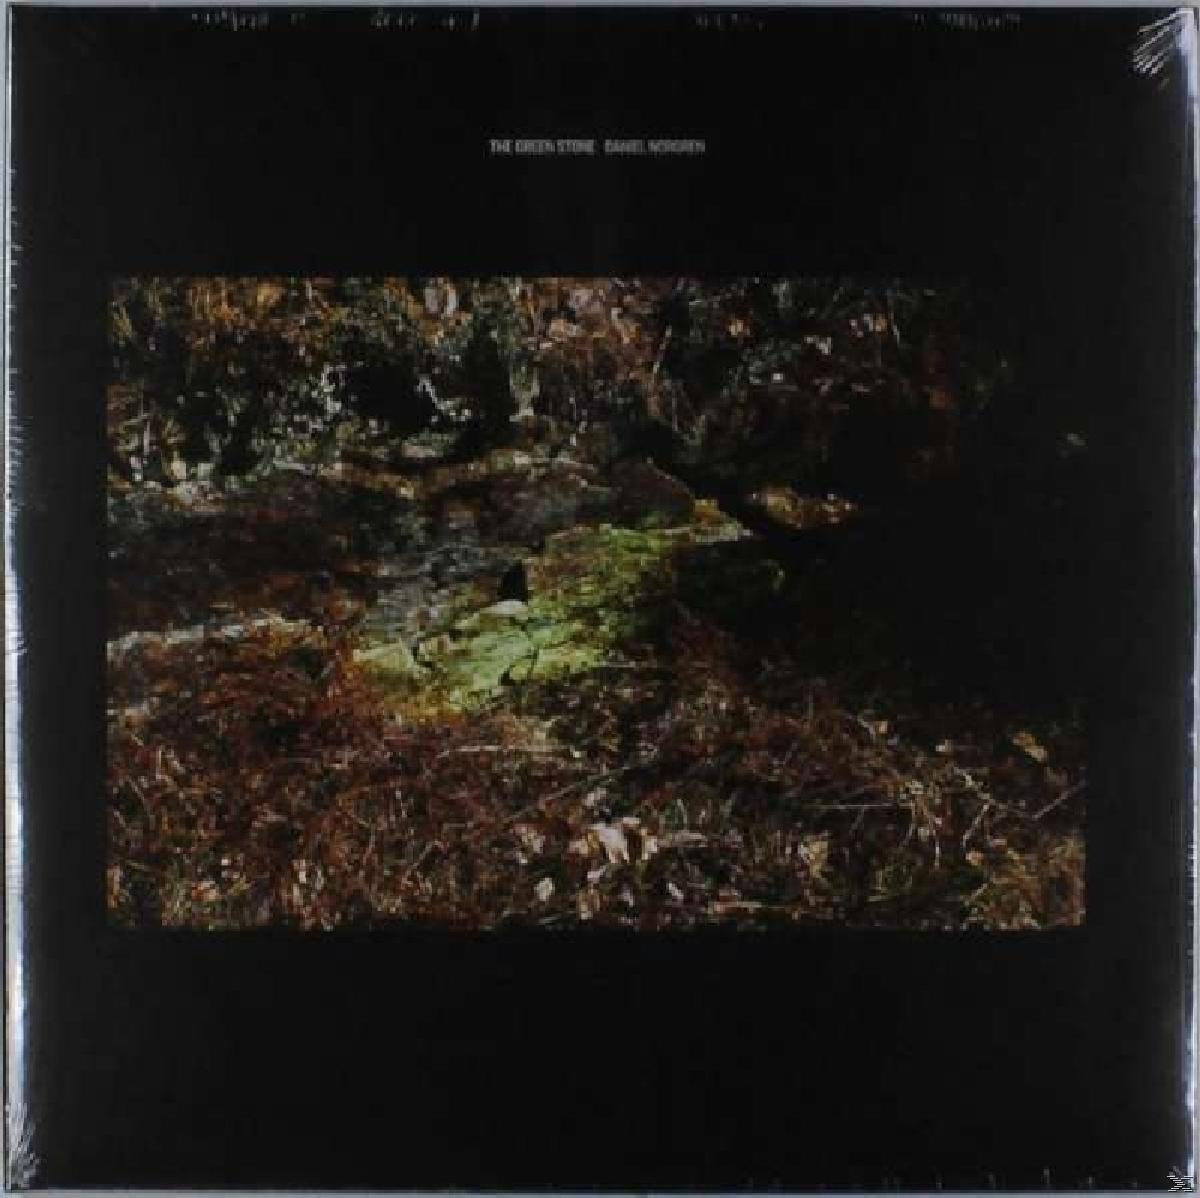 - Norgren Stone - The Daniel Green (Vinyl)